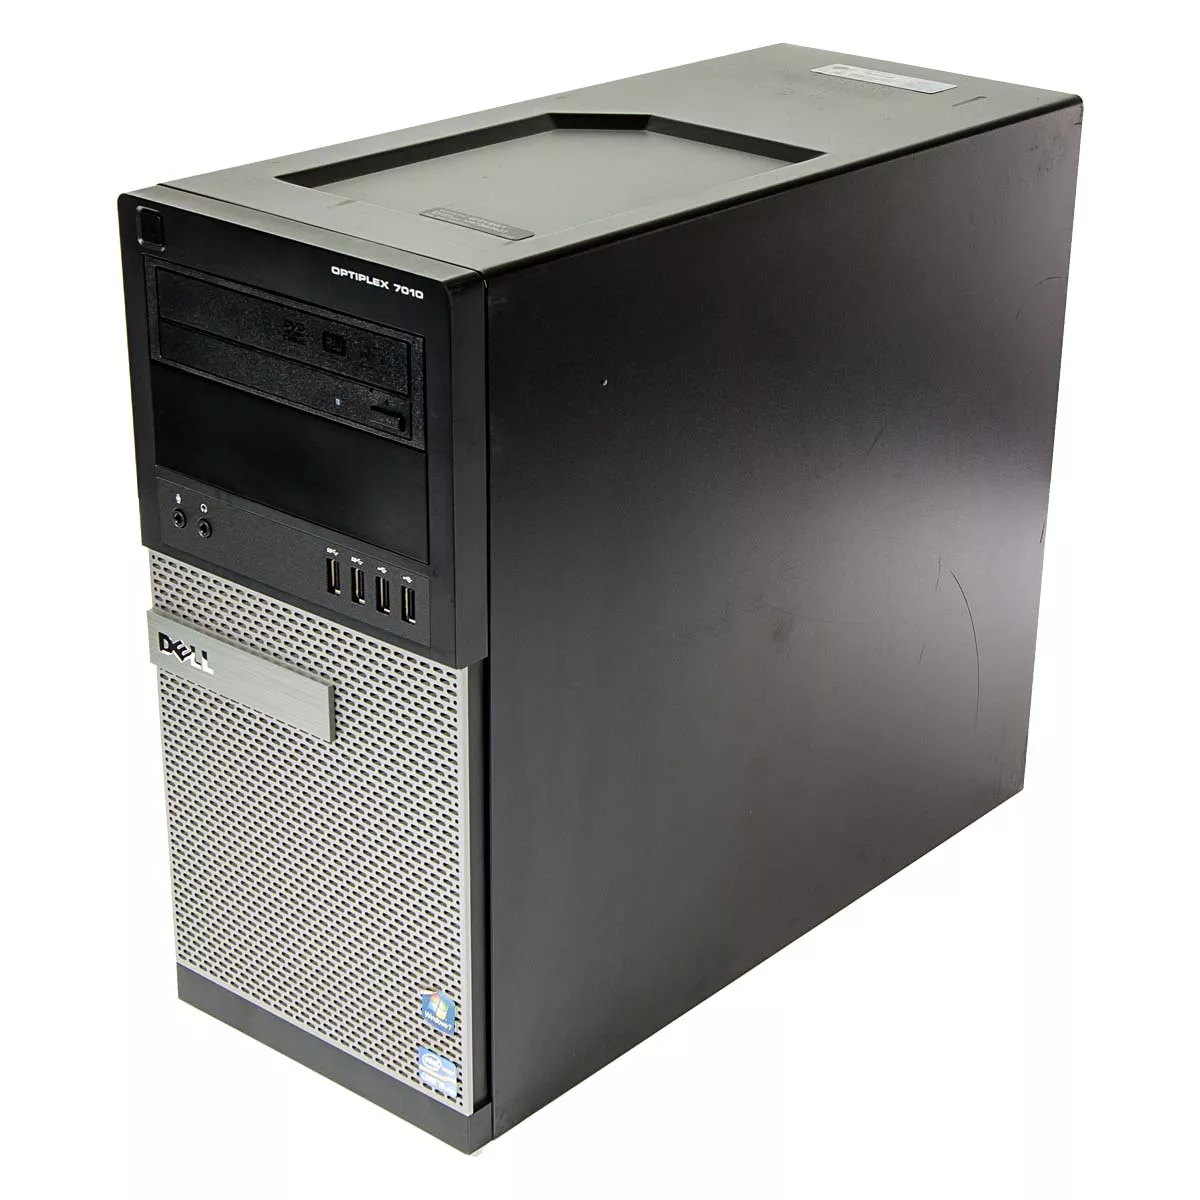 Dell Optiplex 9010 Tower Quad Core i7 3770 3,40 GHz